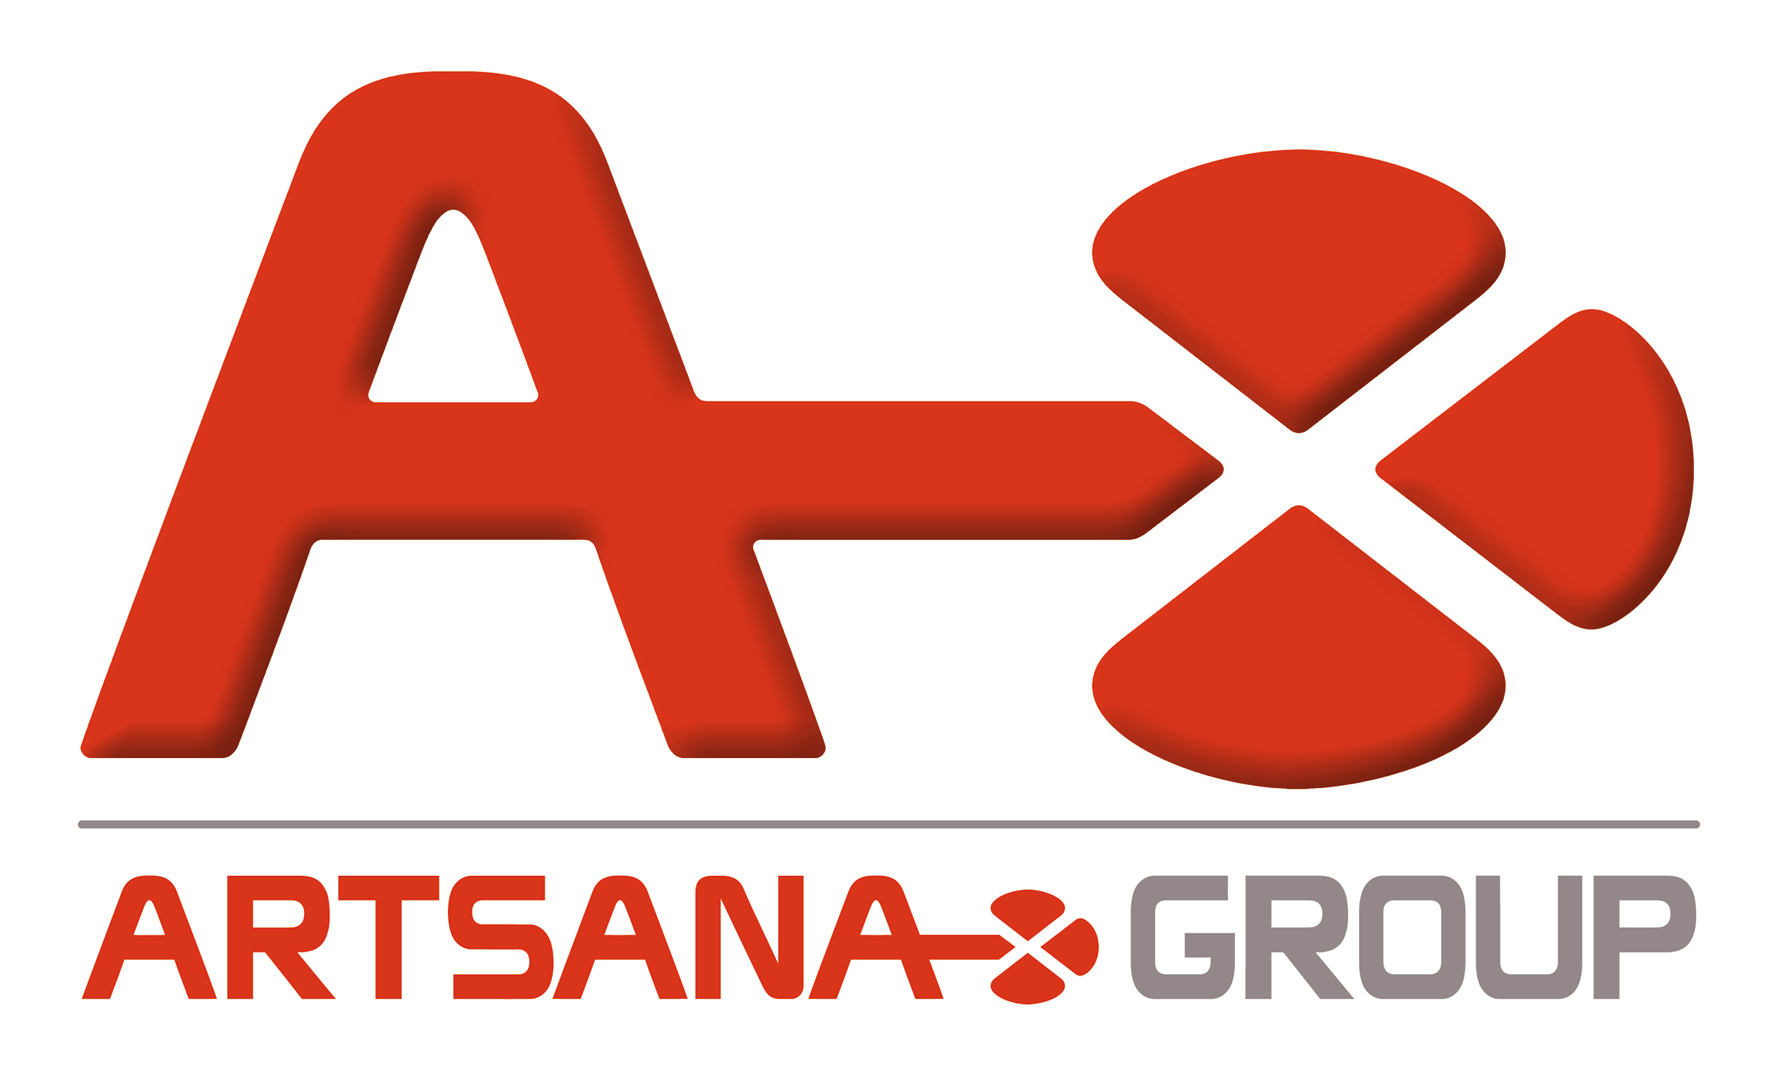 35. Artsana Group